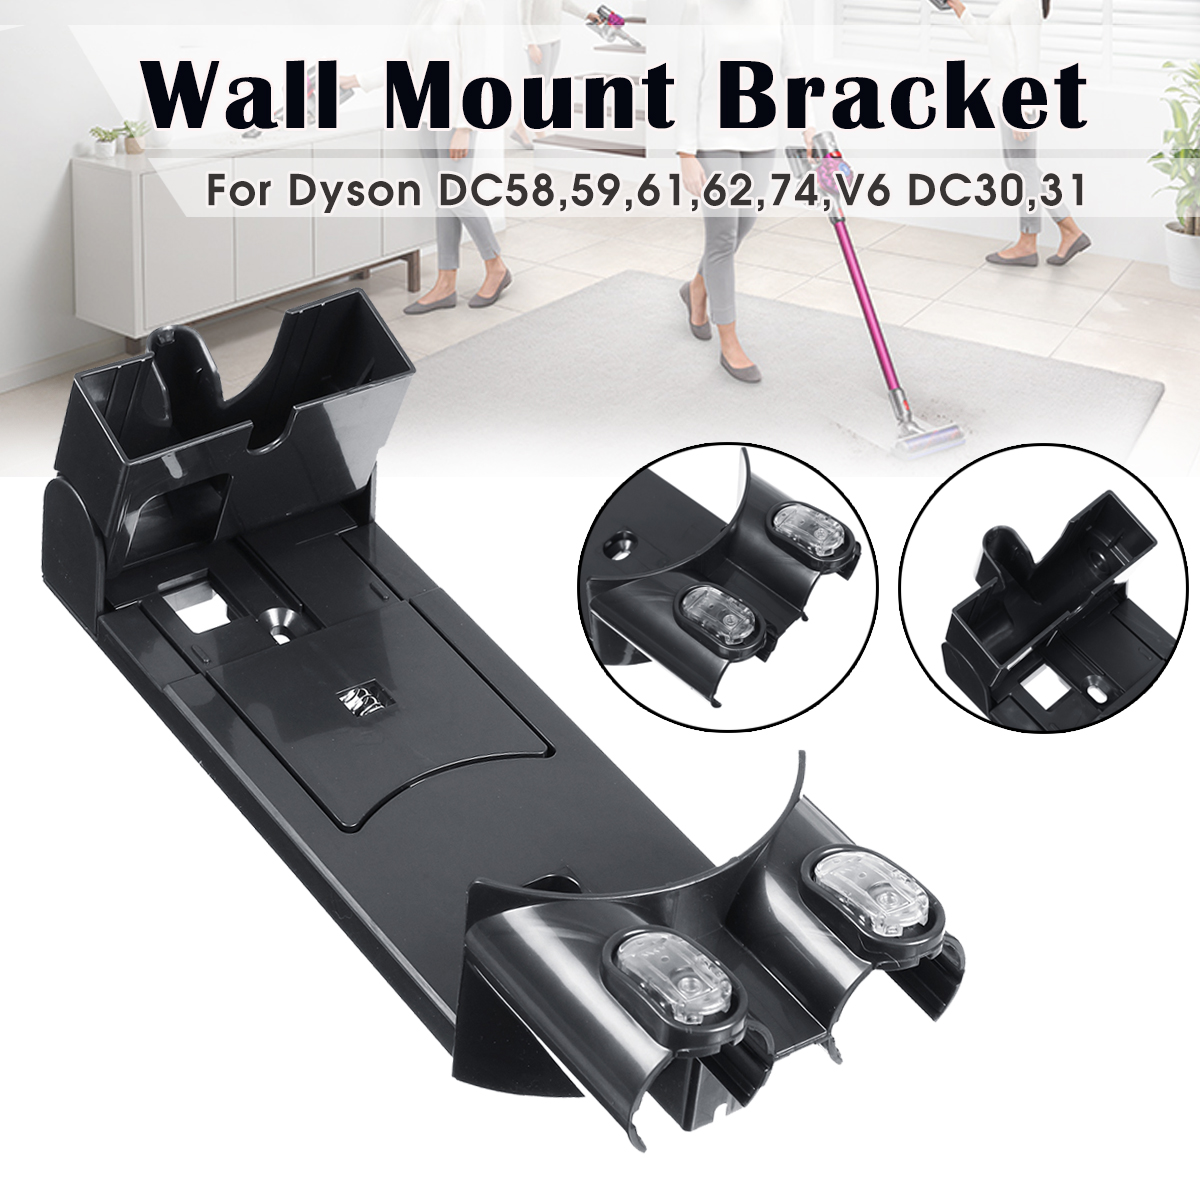 Handheld-Vacuum-Cleaner-Wall-Mount-Bracket-For-Dyson-DC5859616274V6DC3031-1559068-2